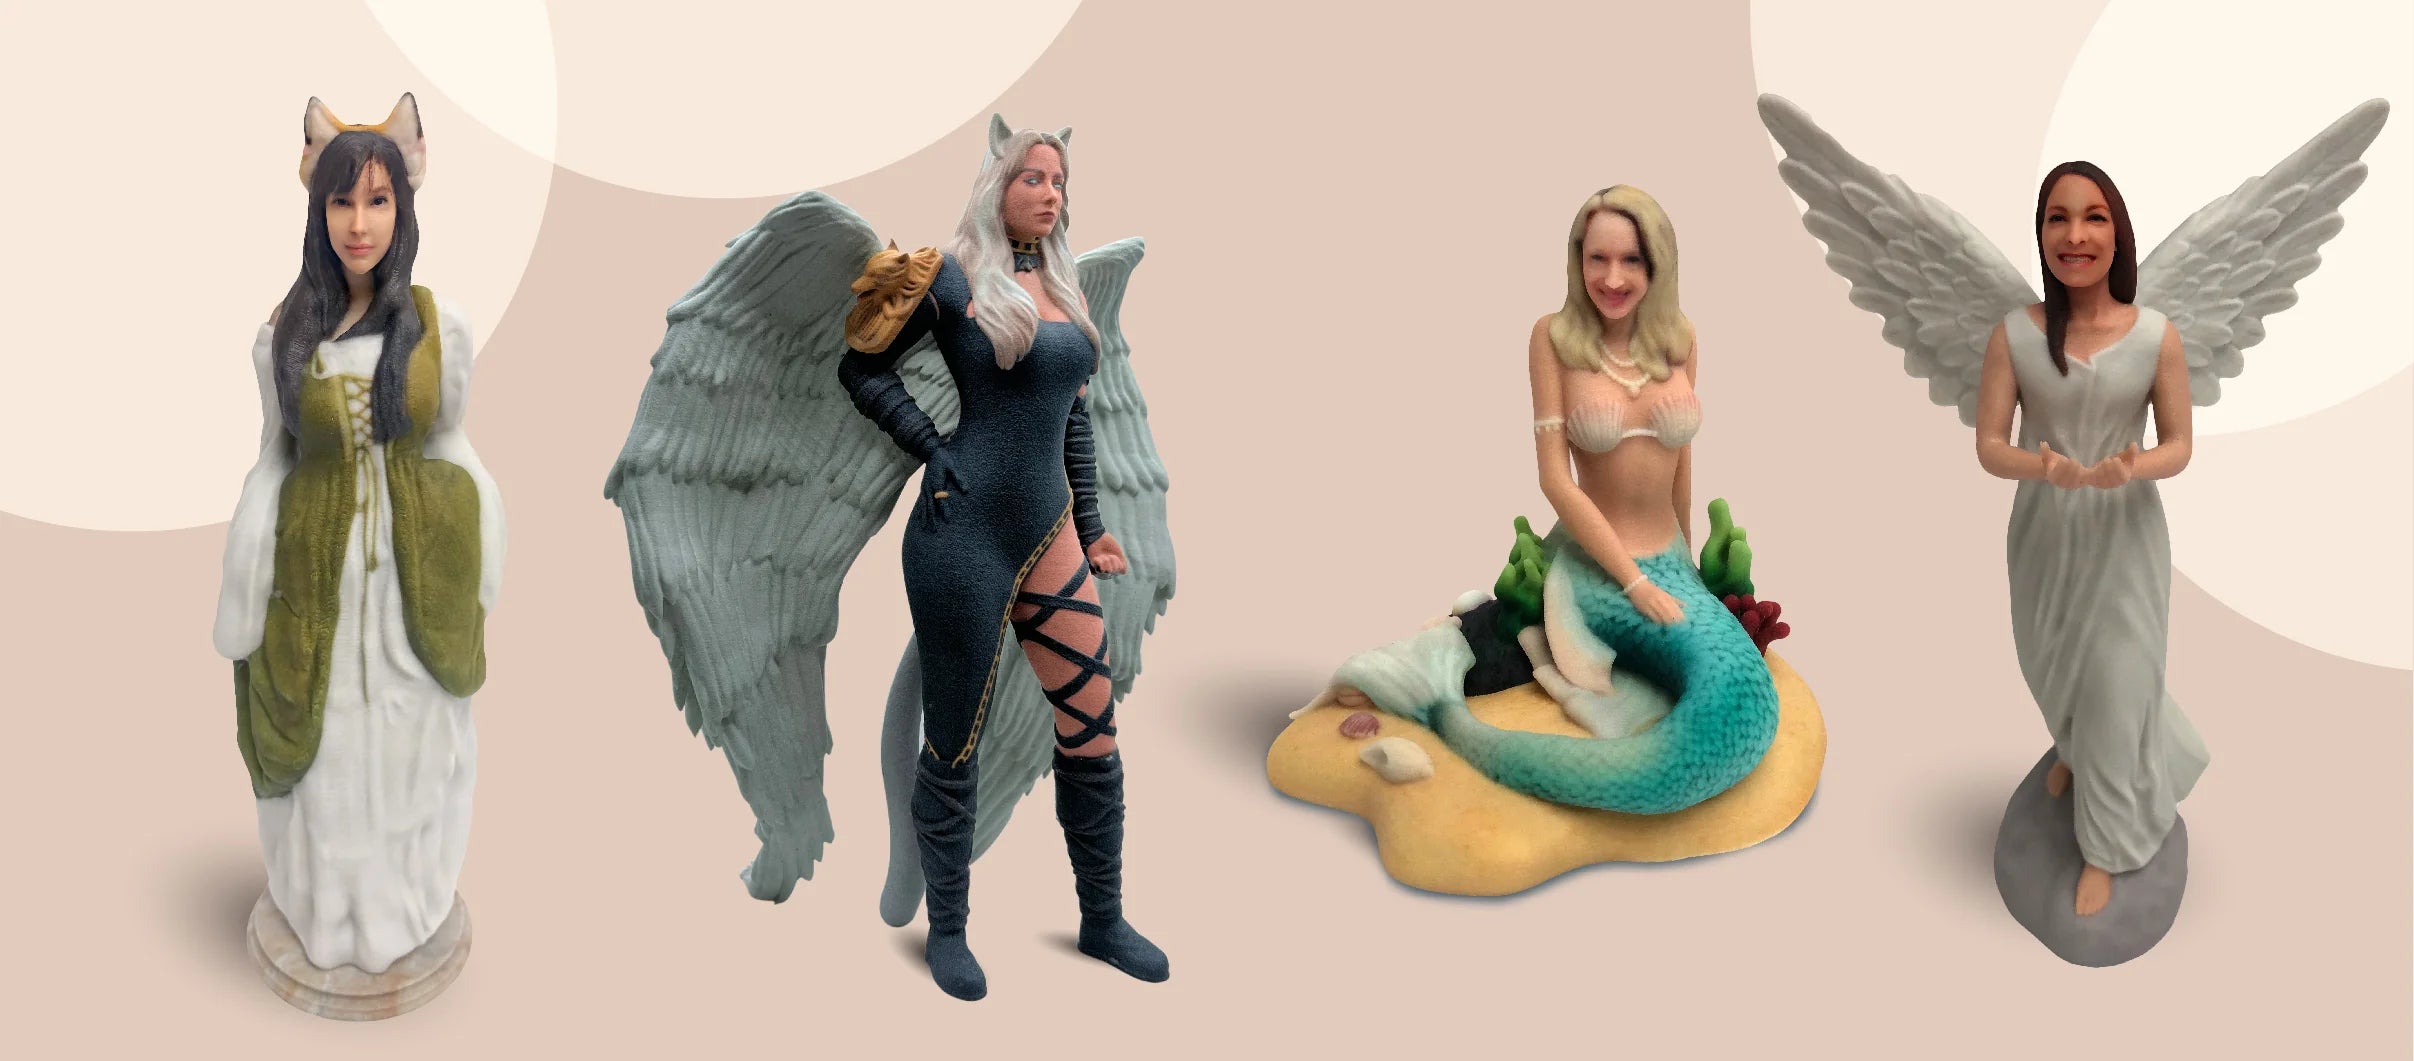 Create fantasy figurines of virtual characters